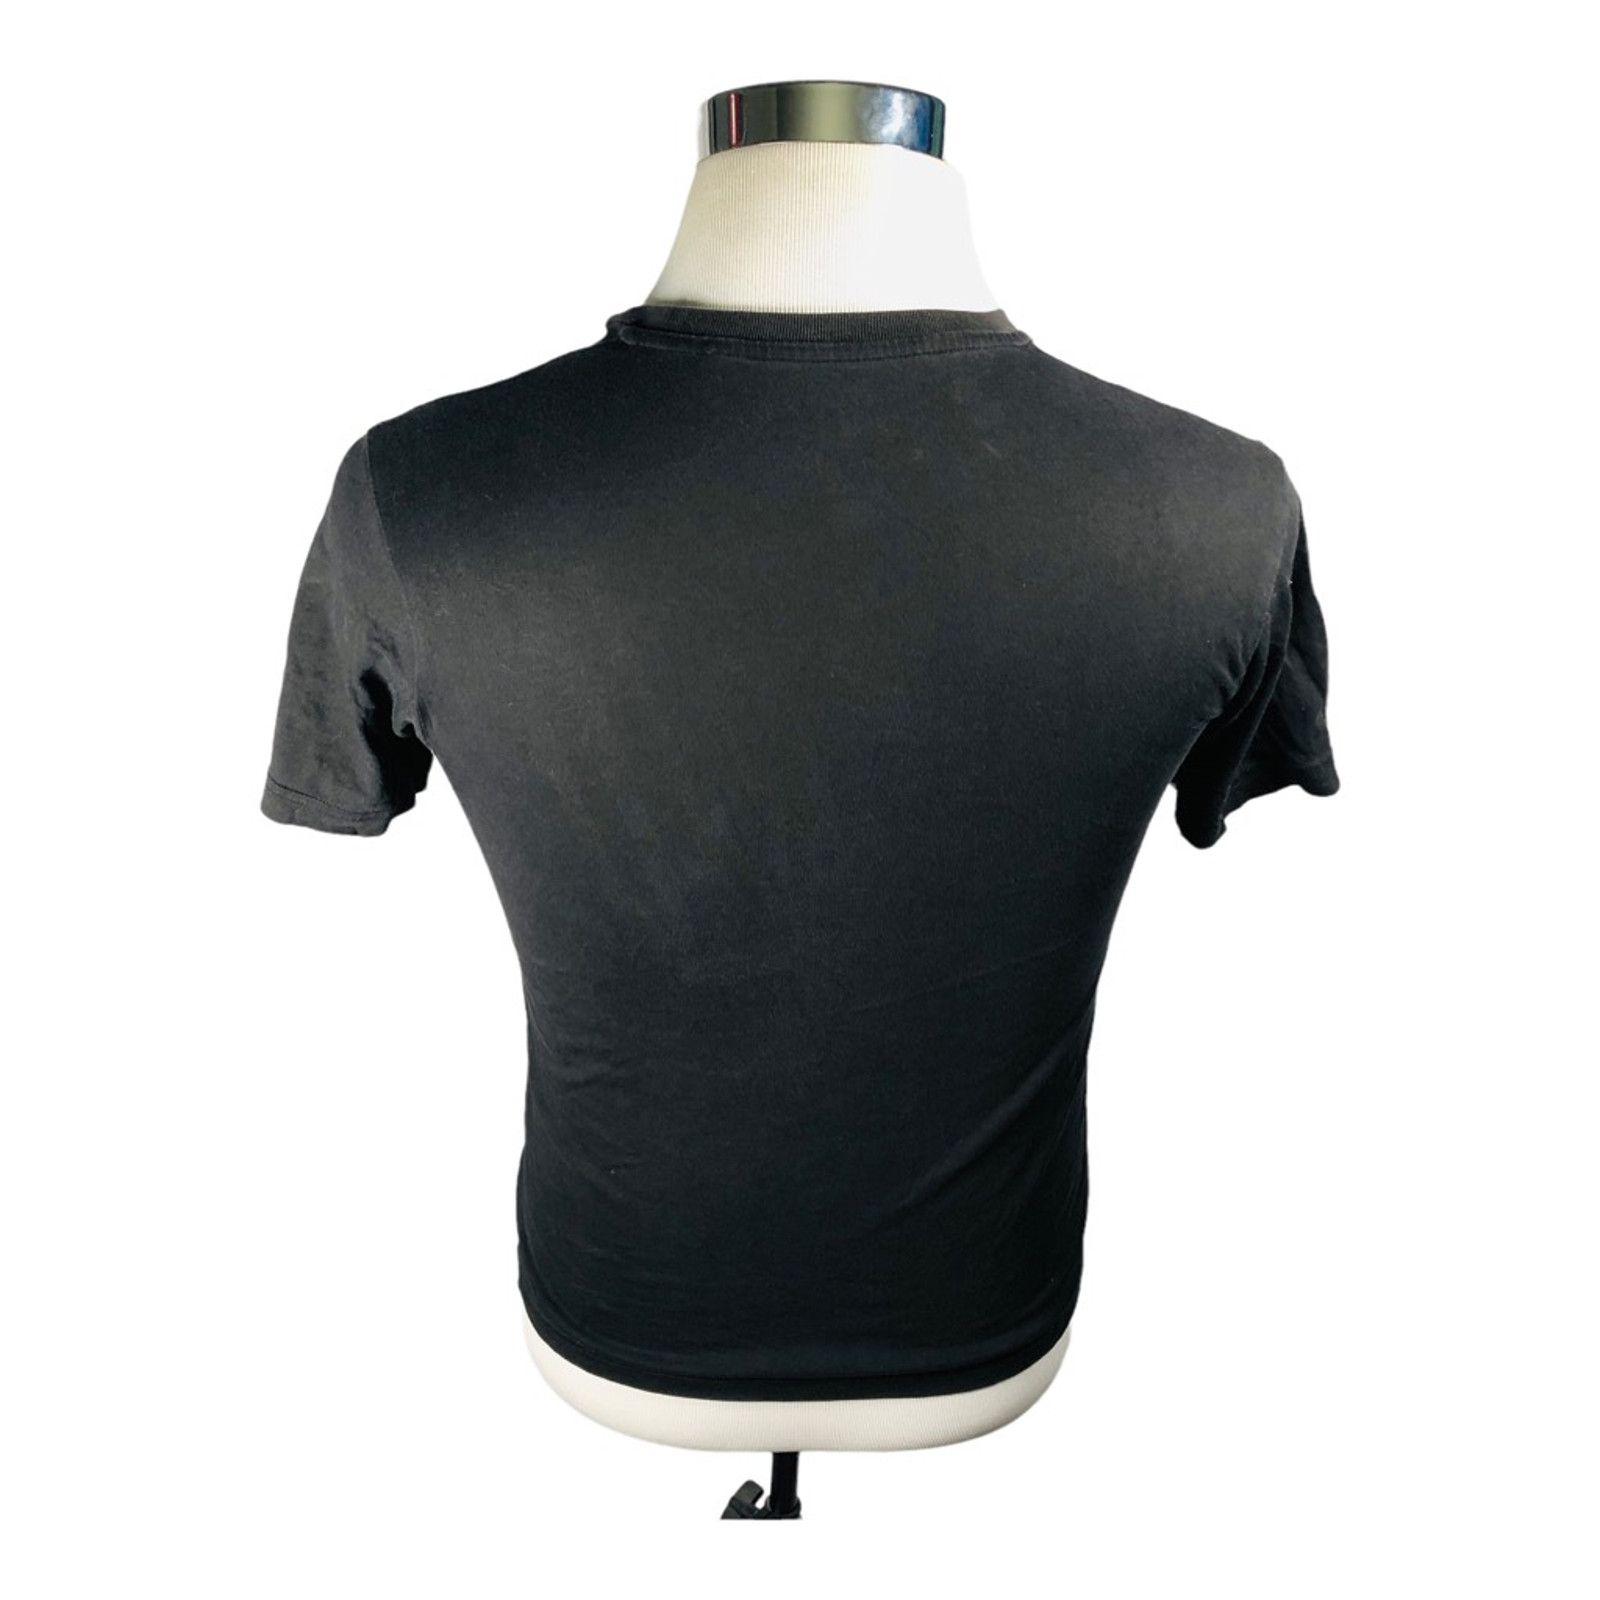 Uniqlo Stephen Shore Uniqlo Moma Sprz Ny Graphic T-Shirt Black XXS Size US XXS / EU 40 - 2 Preview